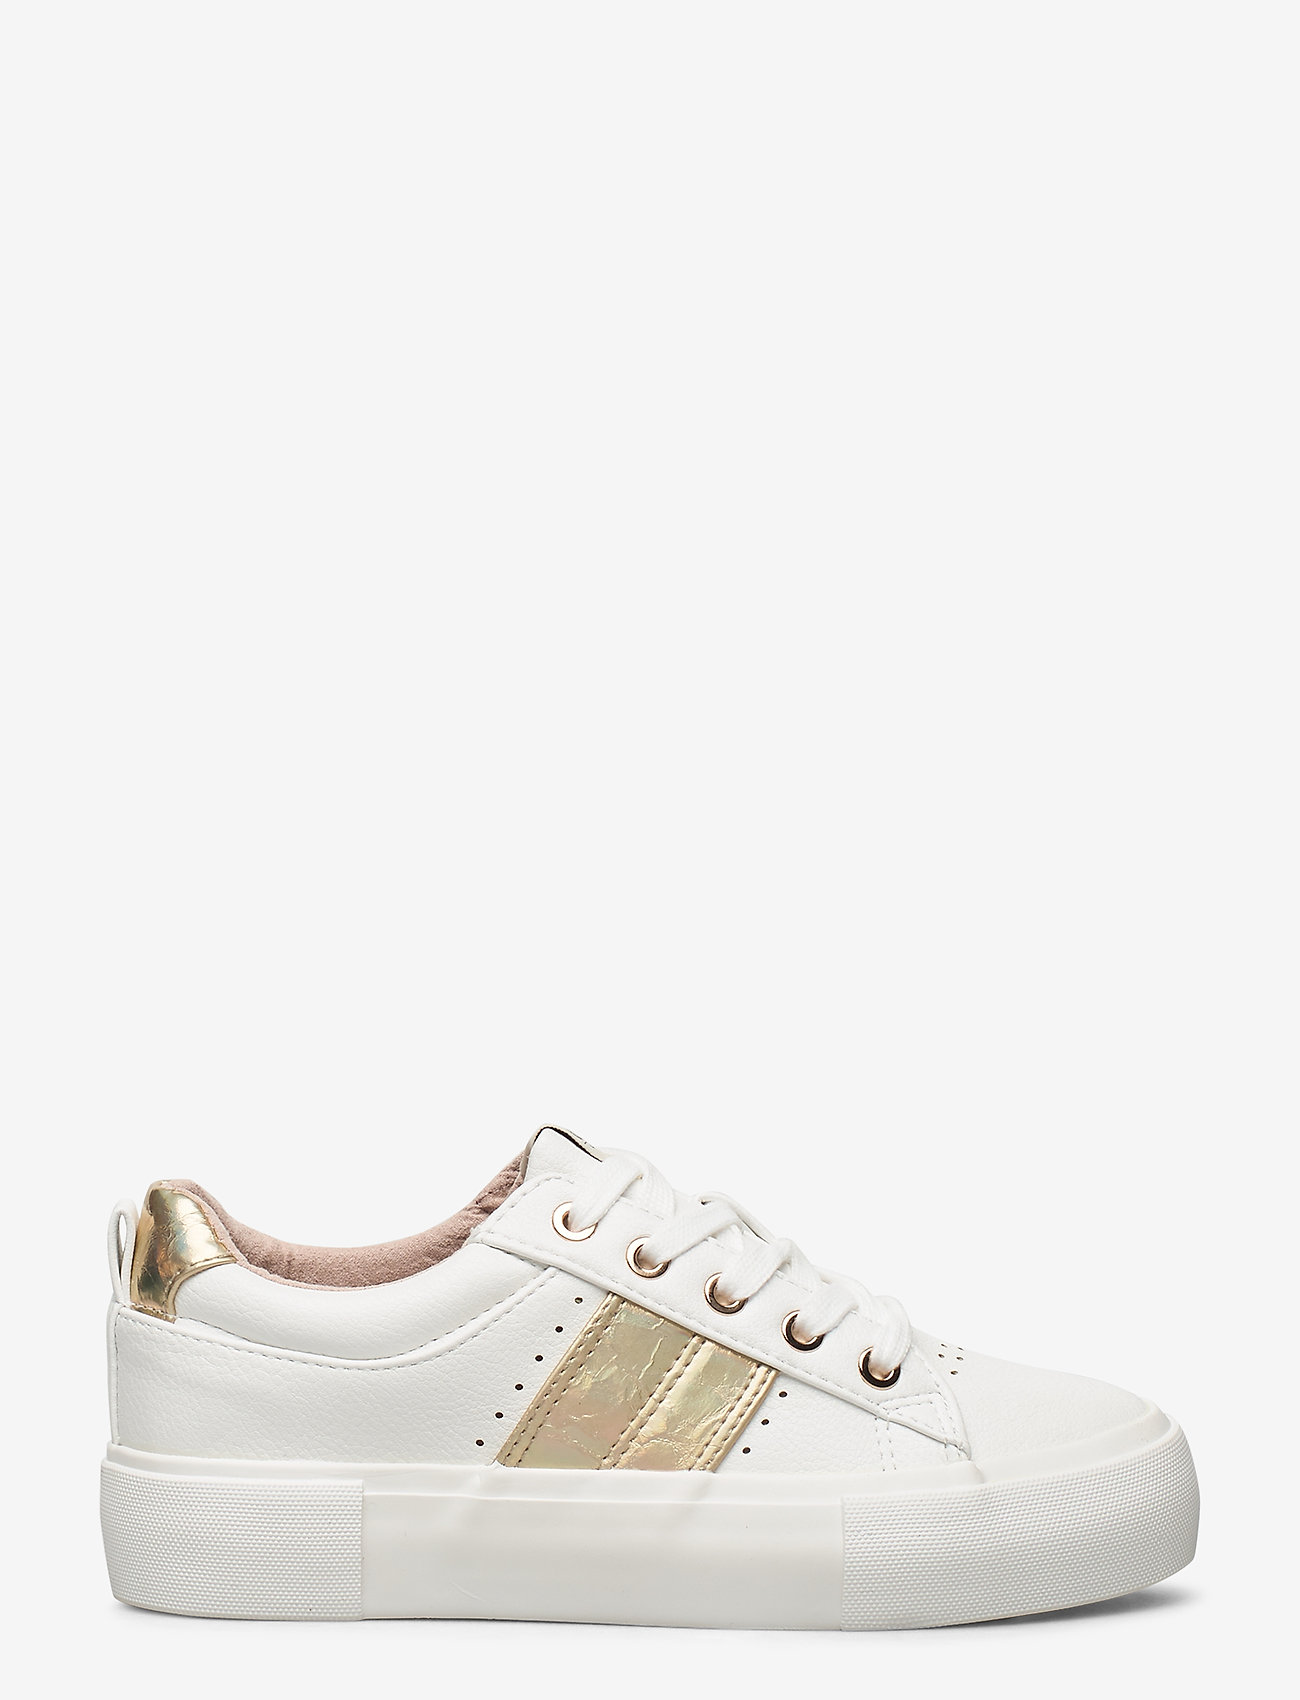 Onlliv-1 Pu Sneaker (White) (20.99 